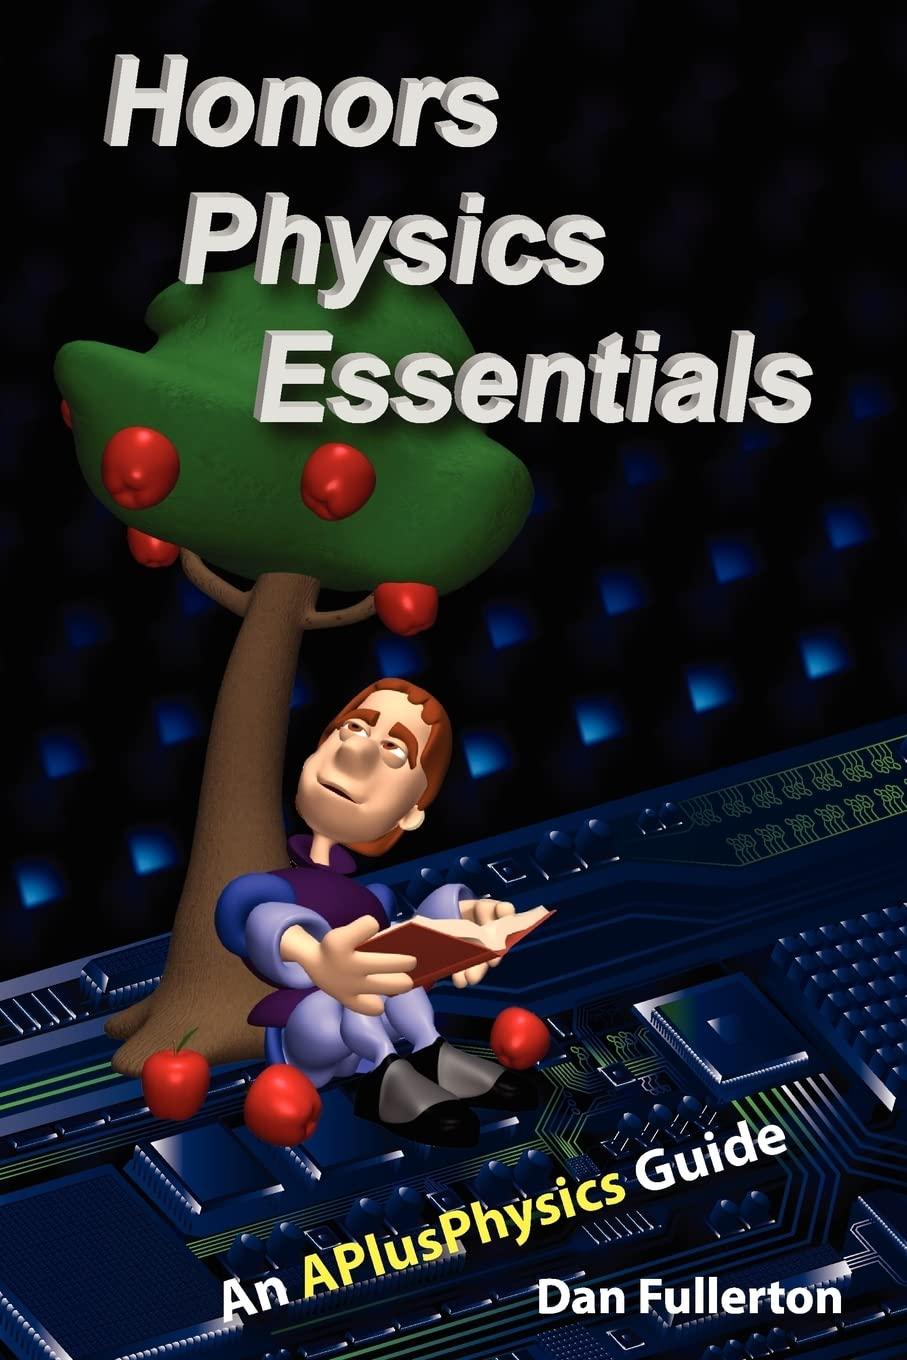 honors physics essentials an aplusphysics guide 1st edition dan fullerton 0983563314, 978-0983563310